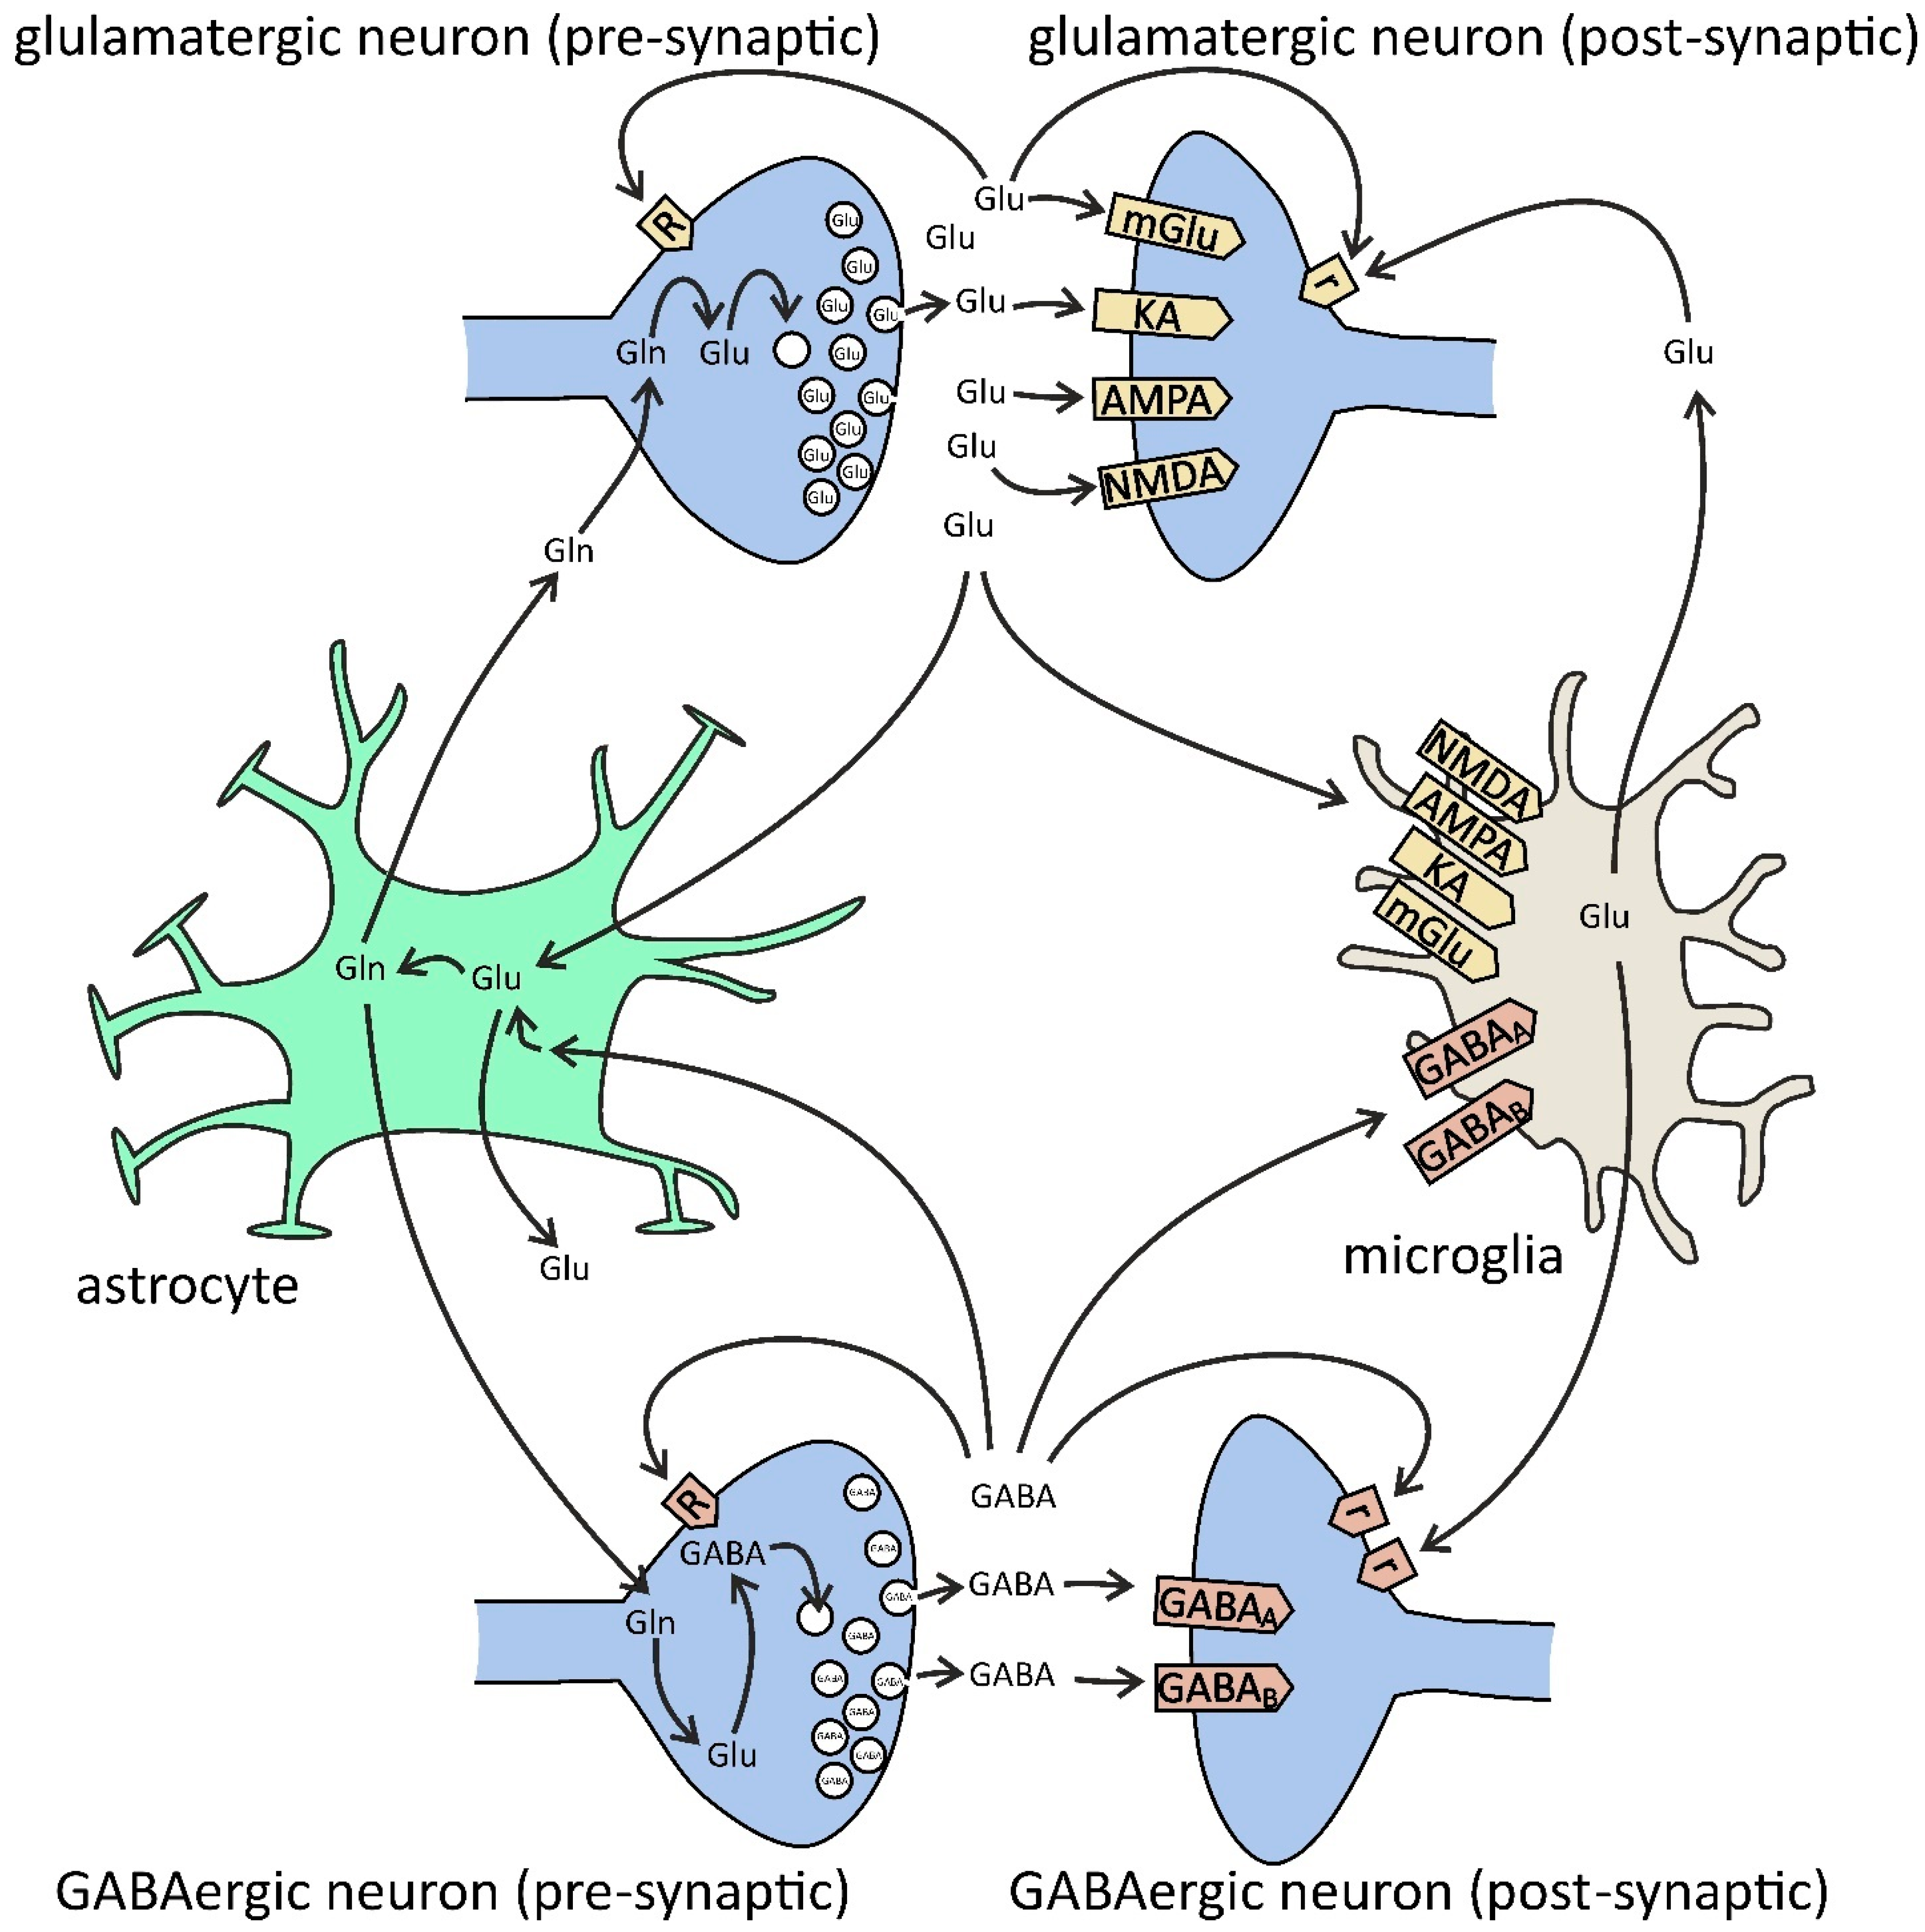 Bilingual neurons release glutamate and GABA